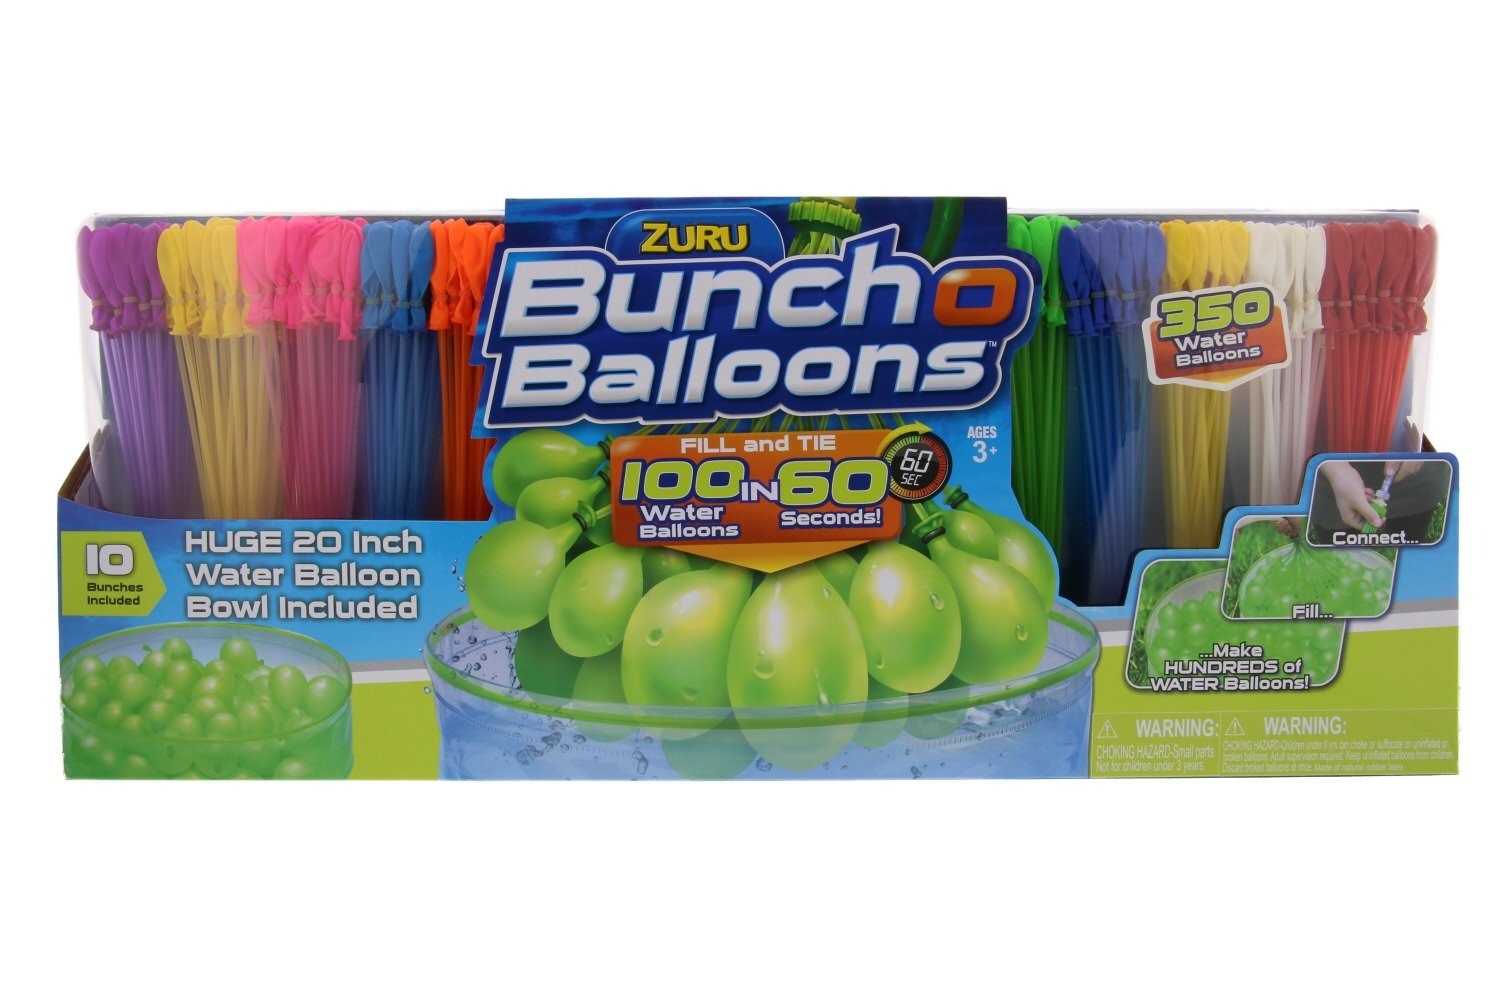 ZURU Bunch O Balloons, Fill in 60 Seconds, 350 Water Balloons, 20" Water Balloon Bowl Included